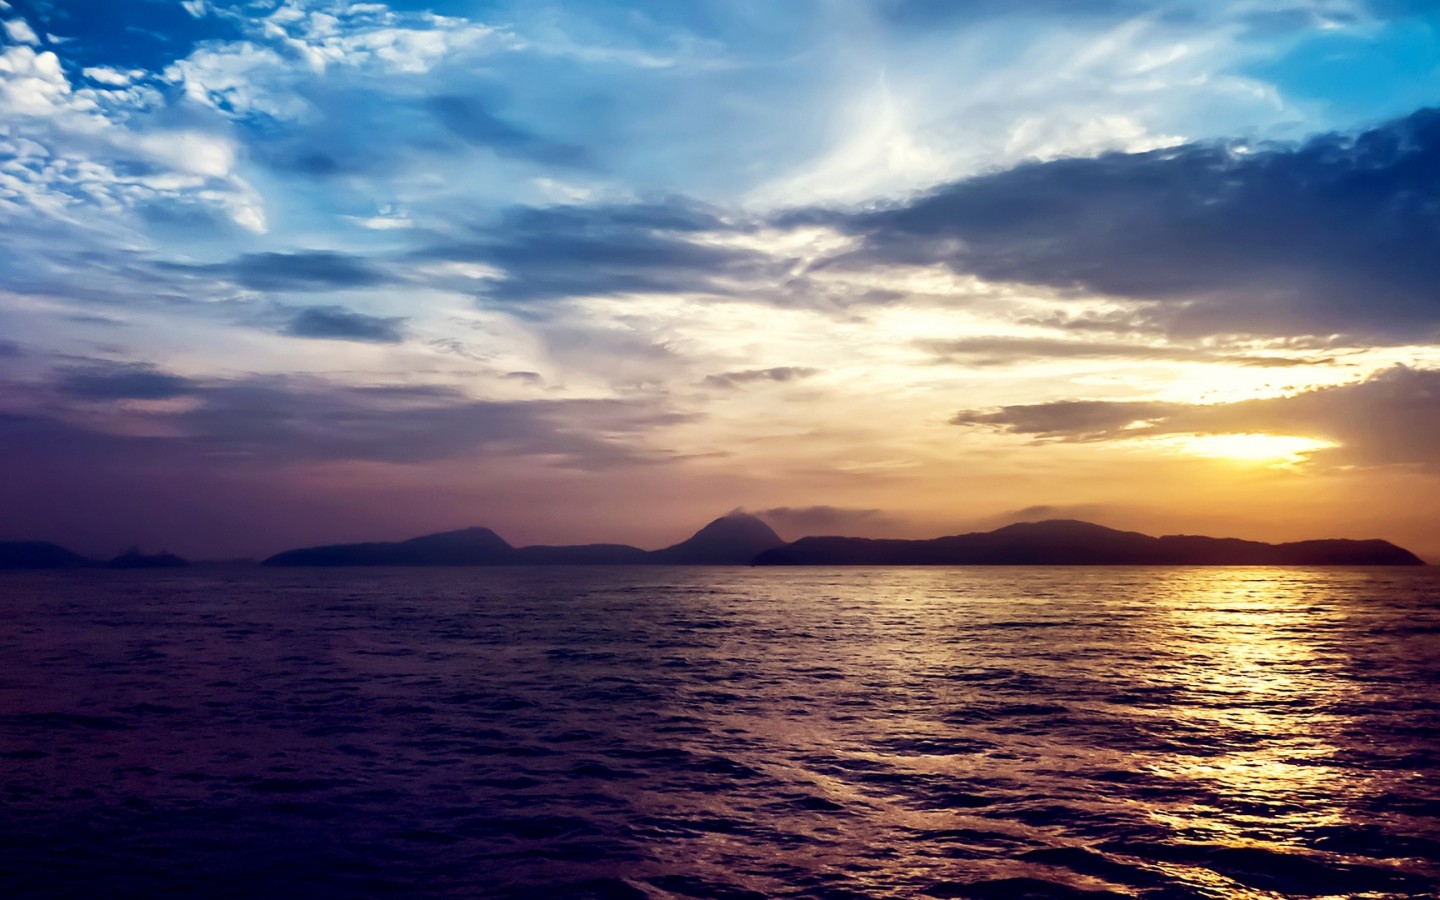 Beautiful sunset at the sea HD Wallpaper